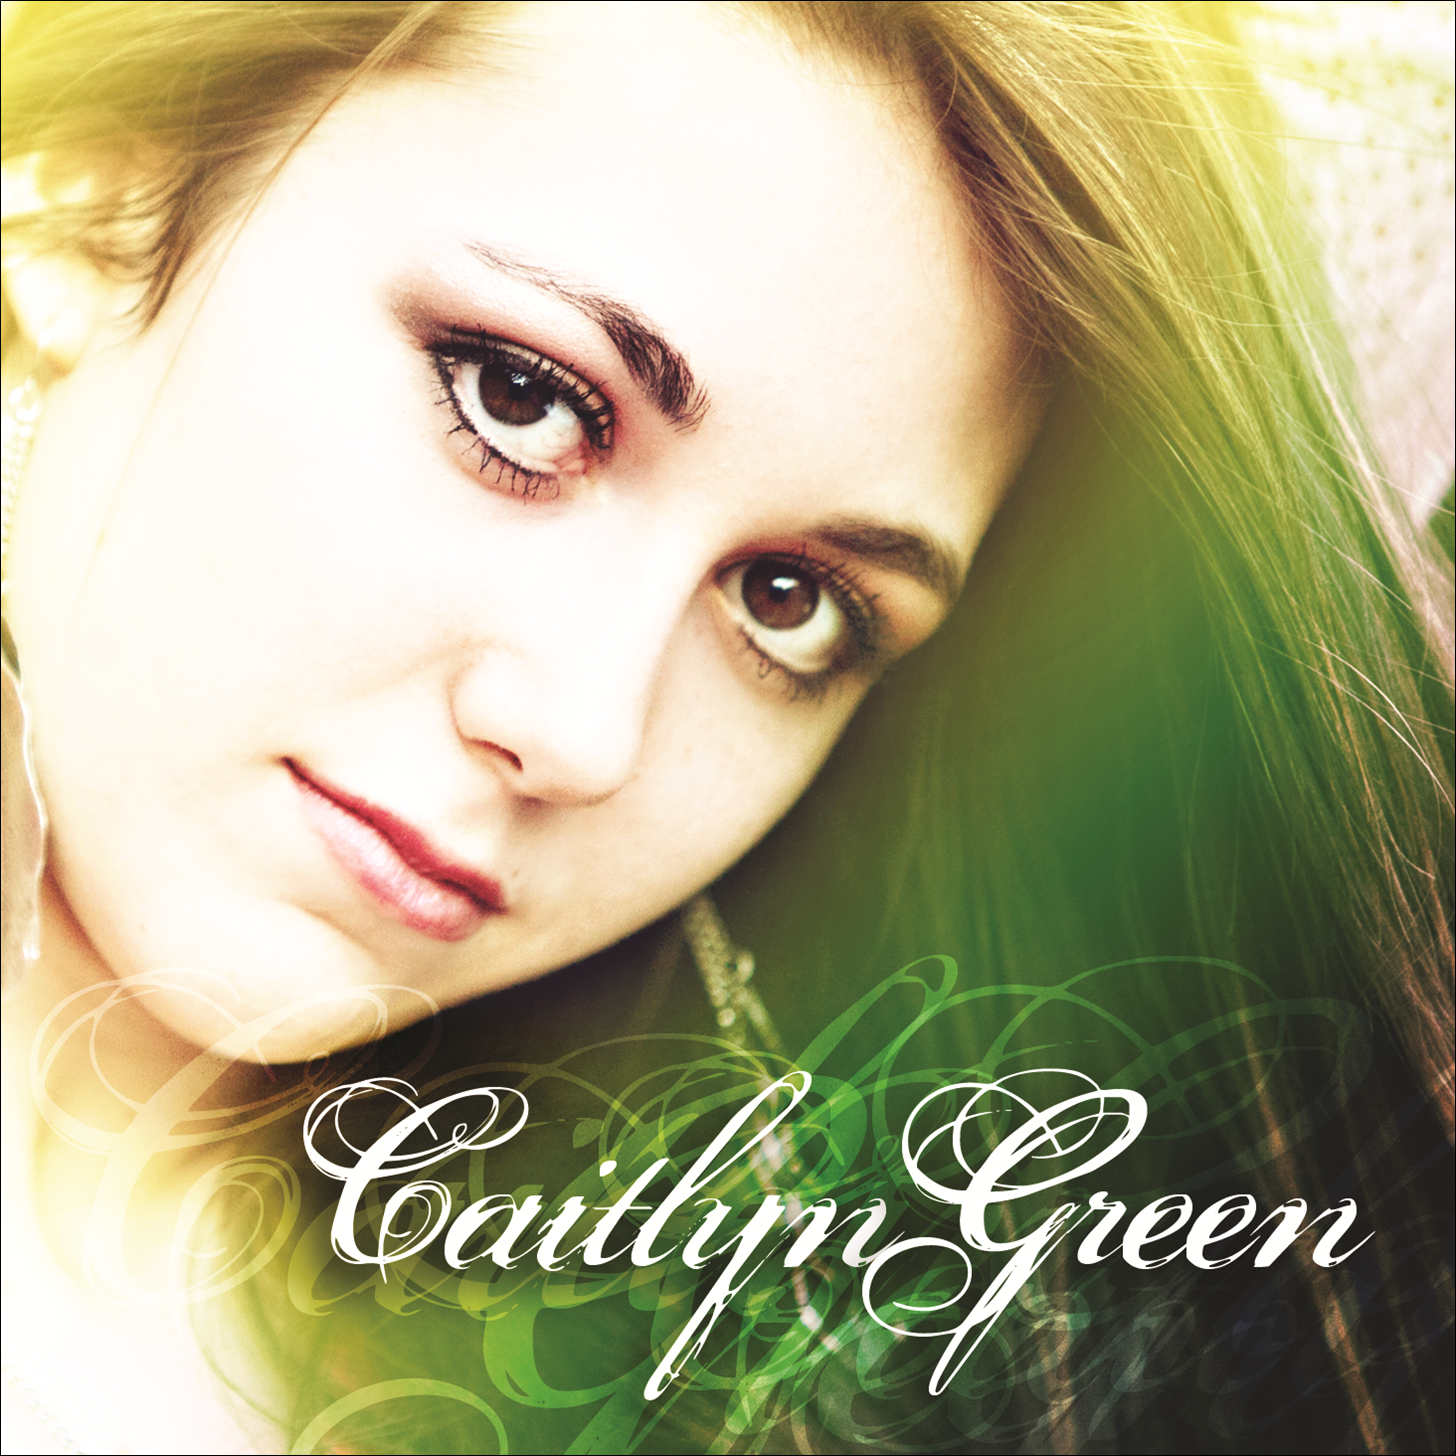 Caitlyn Green